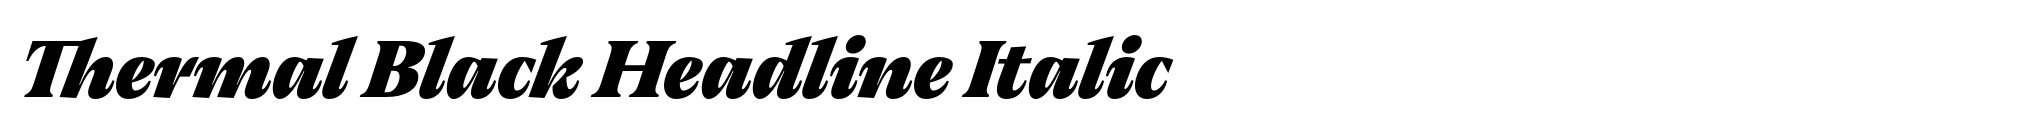 Thermal Black Headline Italic image